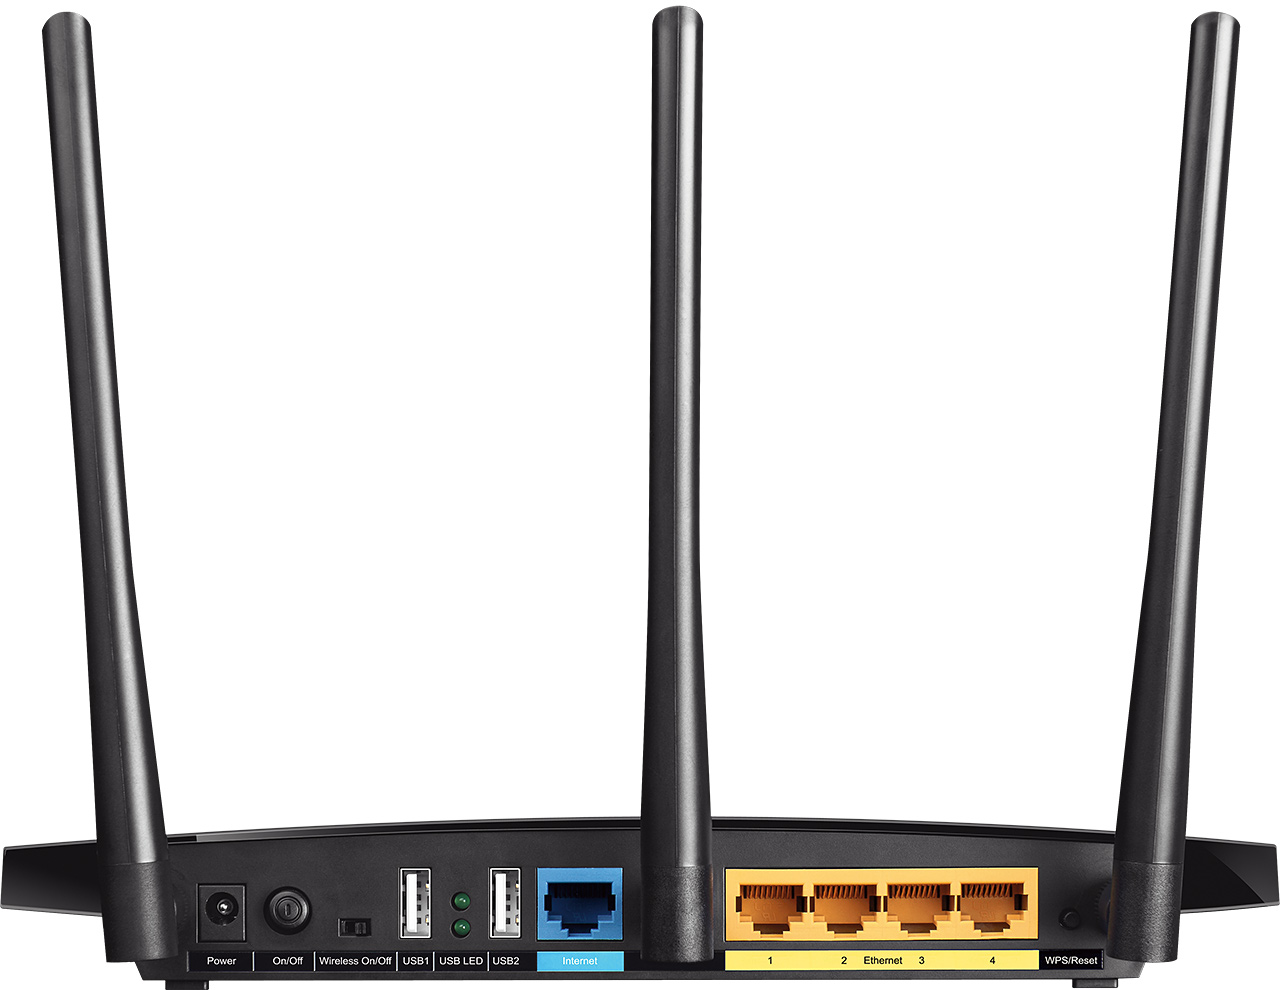 SG :: TP-Link Archer C5 Wireless Router